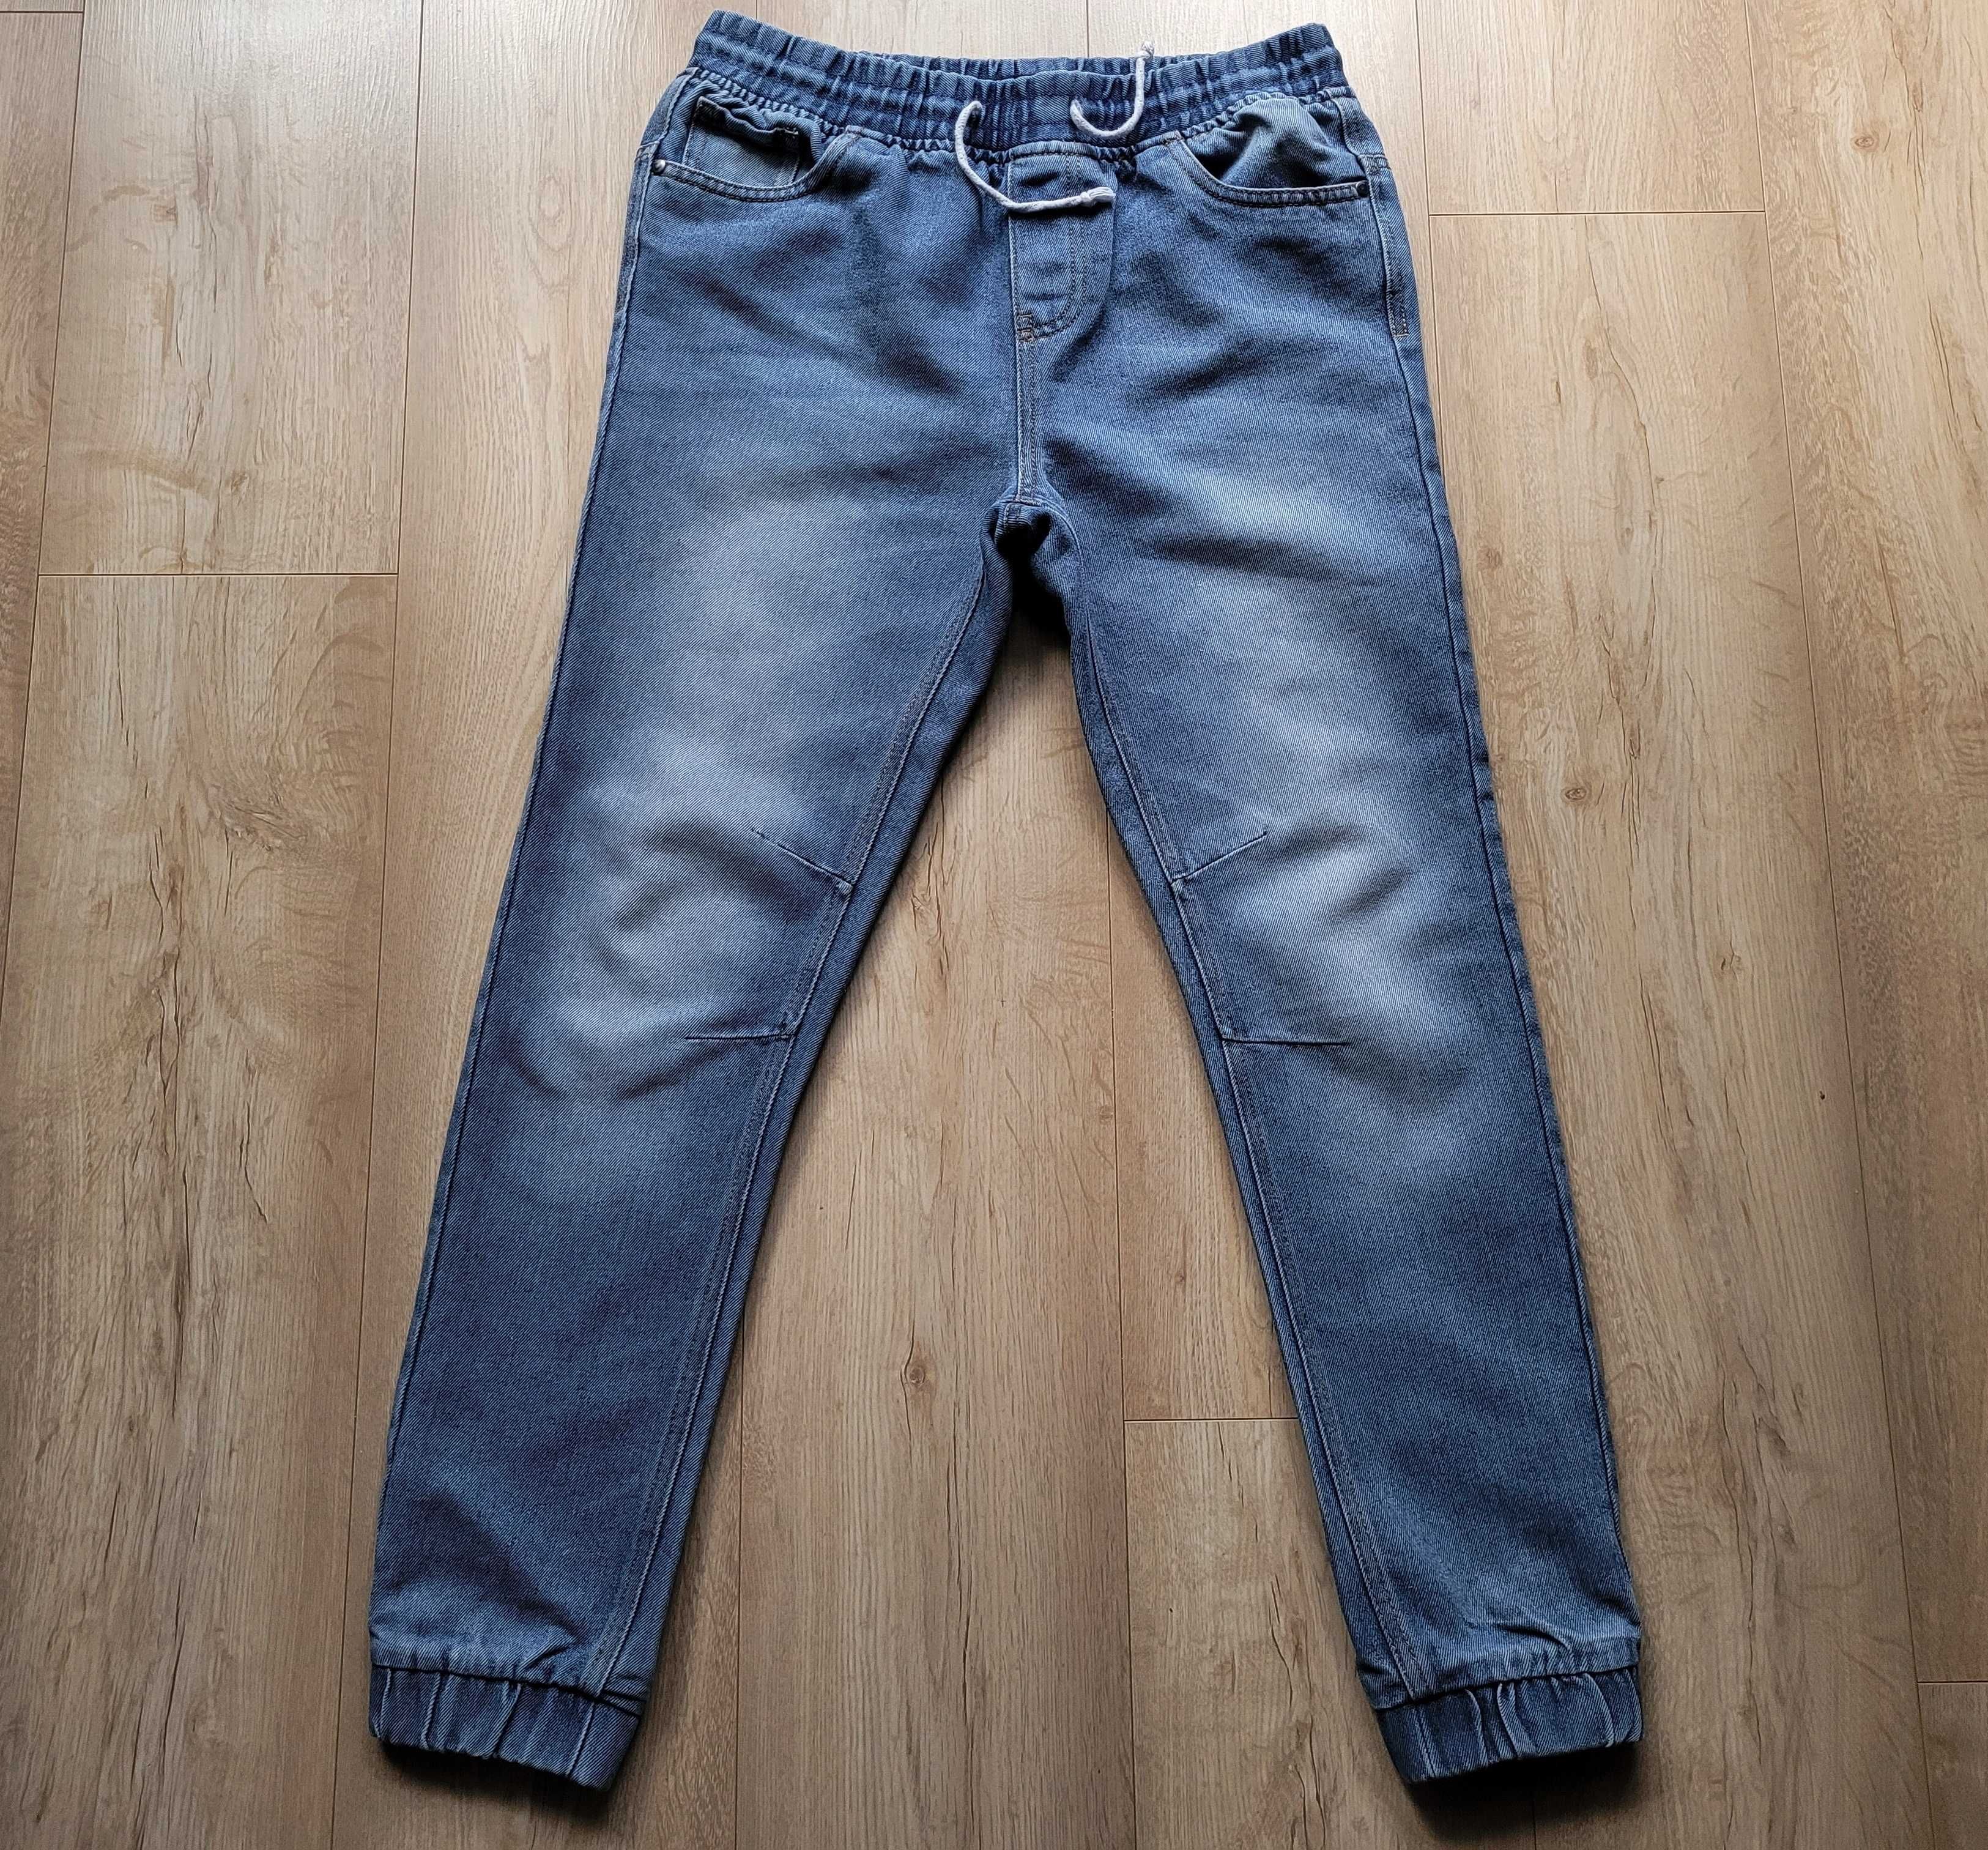 Spodnie joggery jeans - dwie pary 158 cm